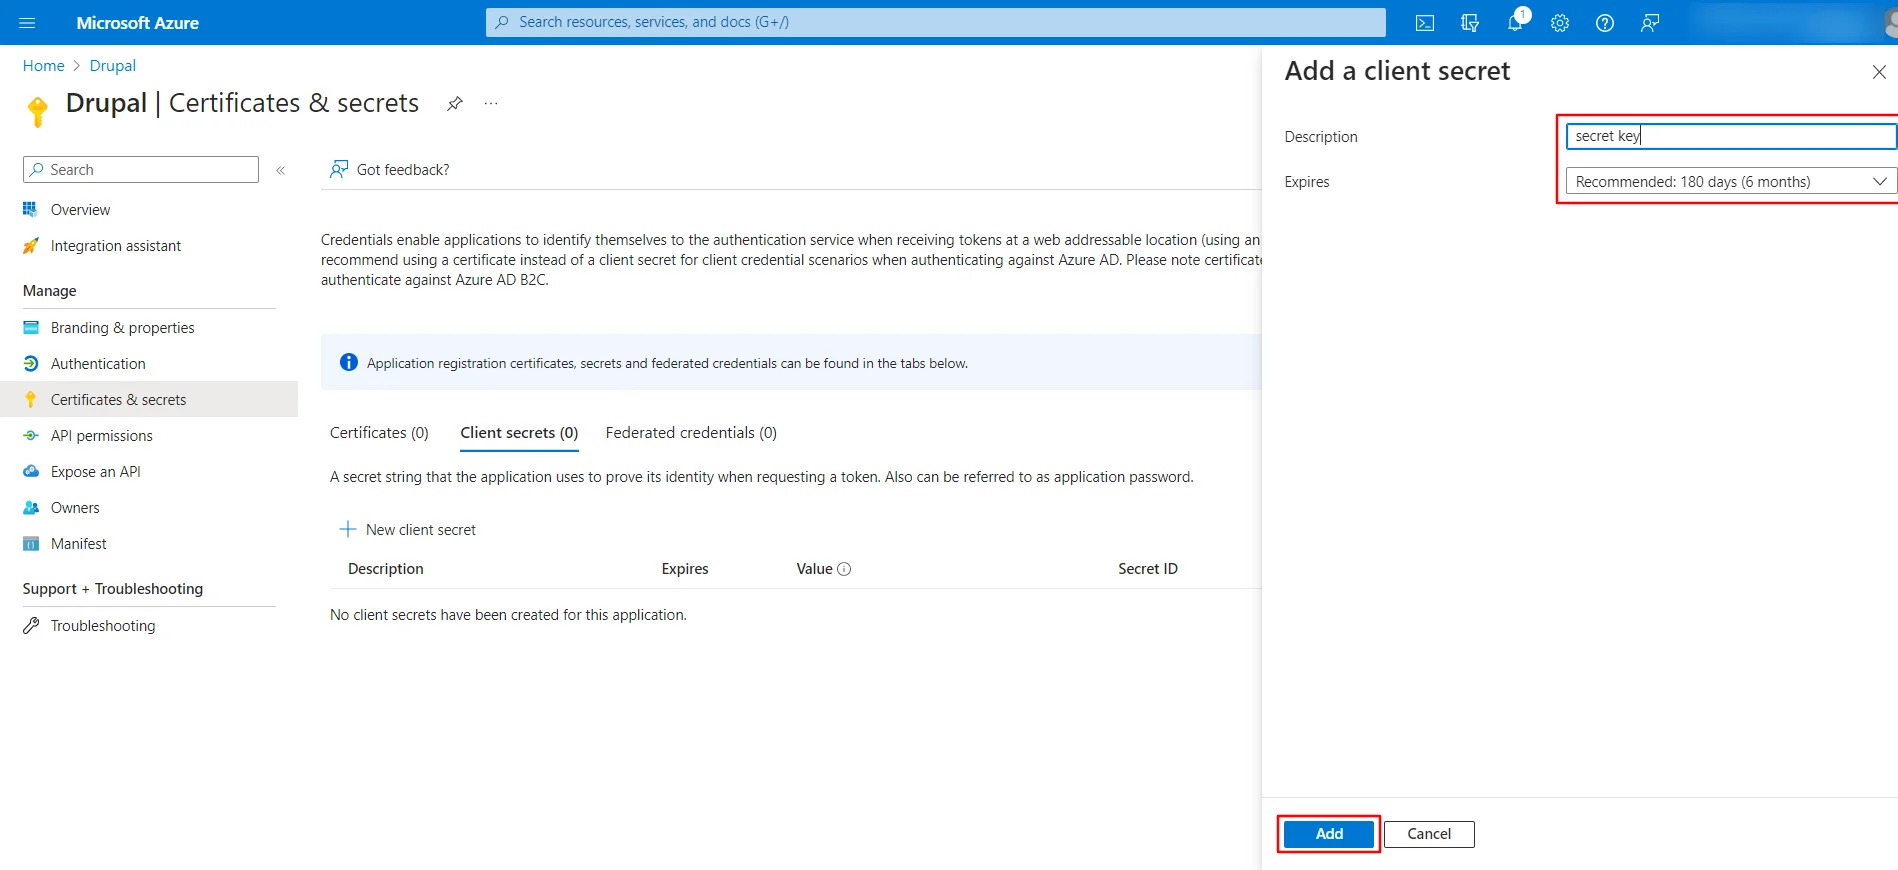 Microsoft Azure - In the Add a client secret popup, enter the description and expires